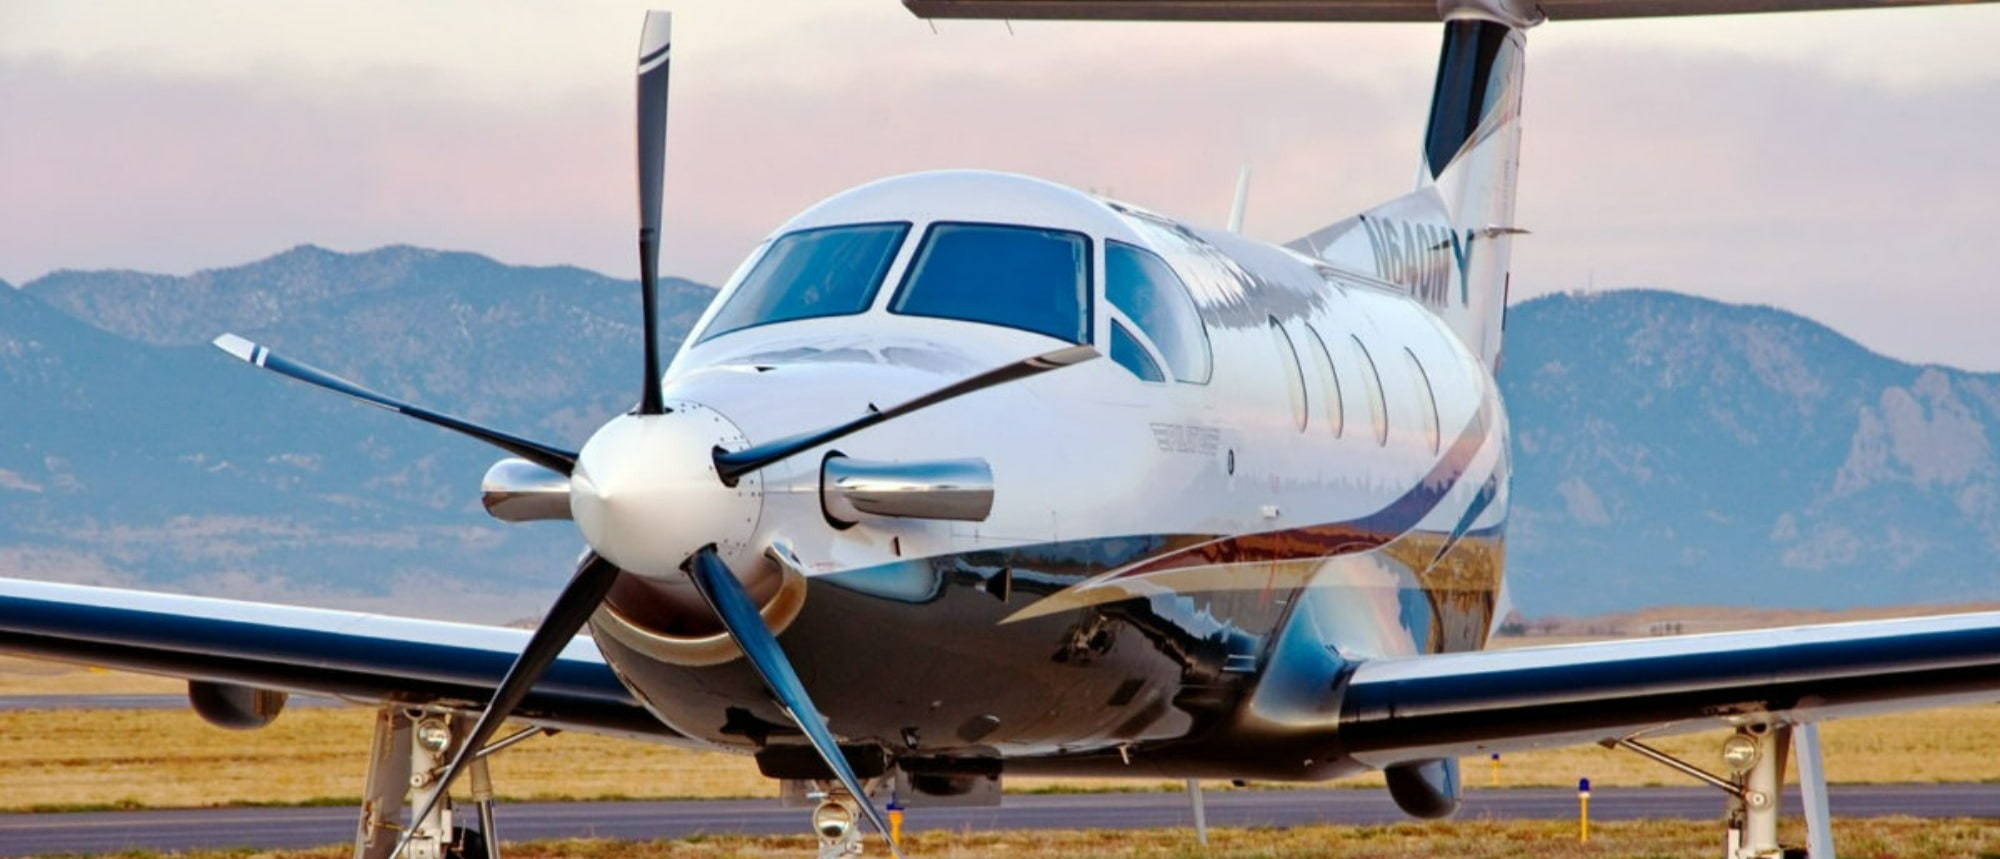 Pilatus PC12 on runway